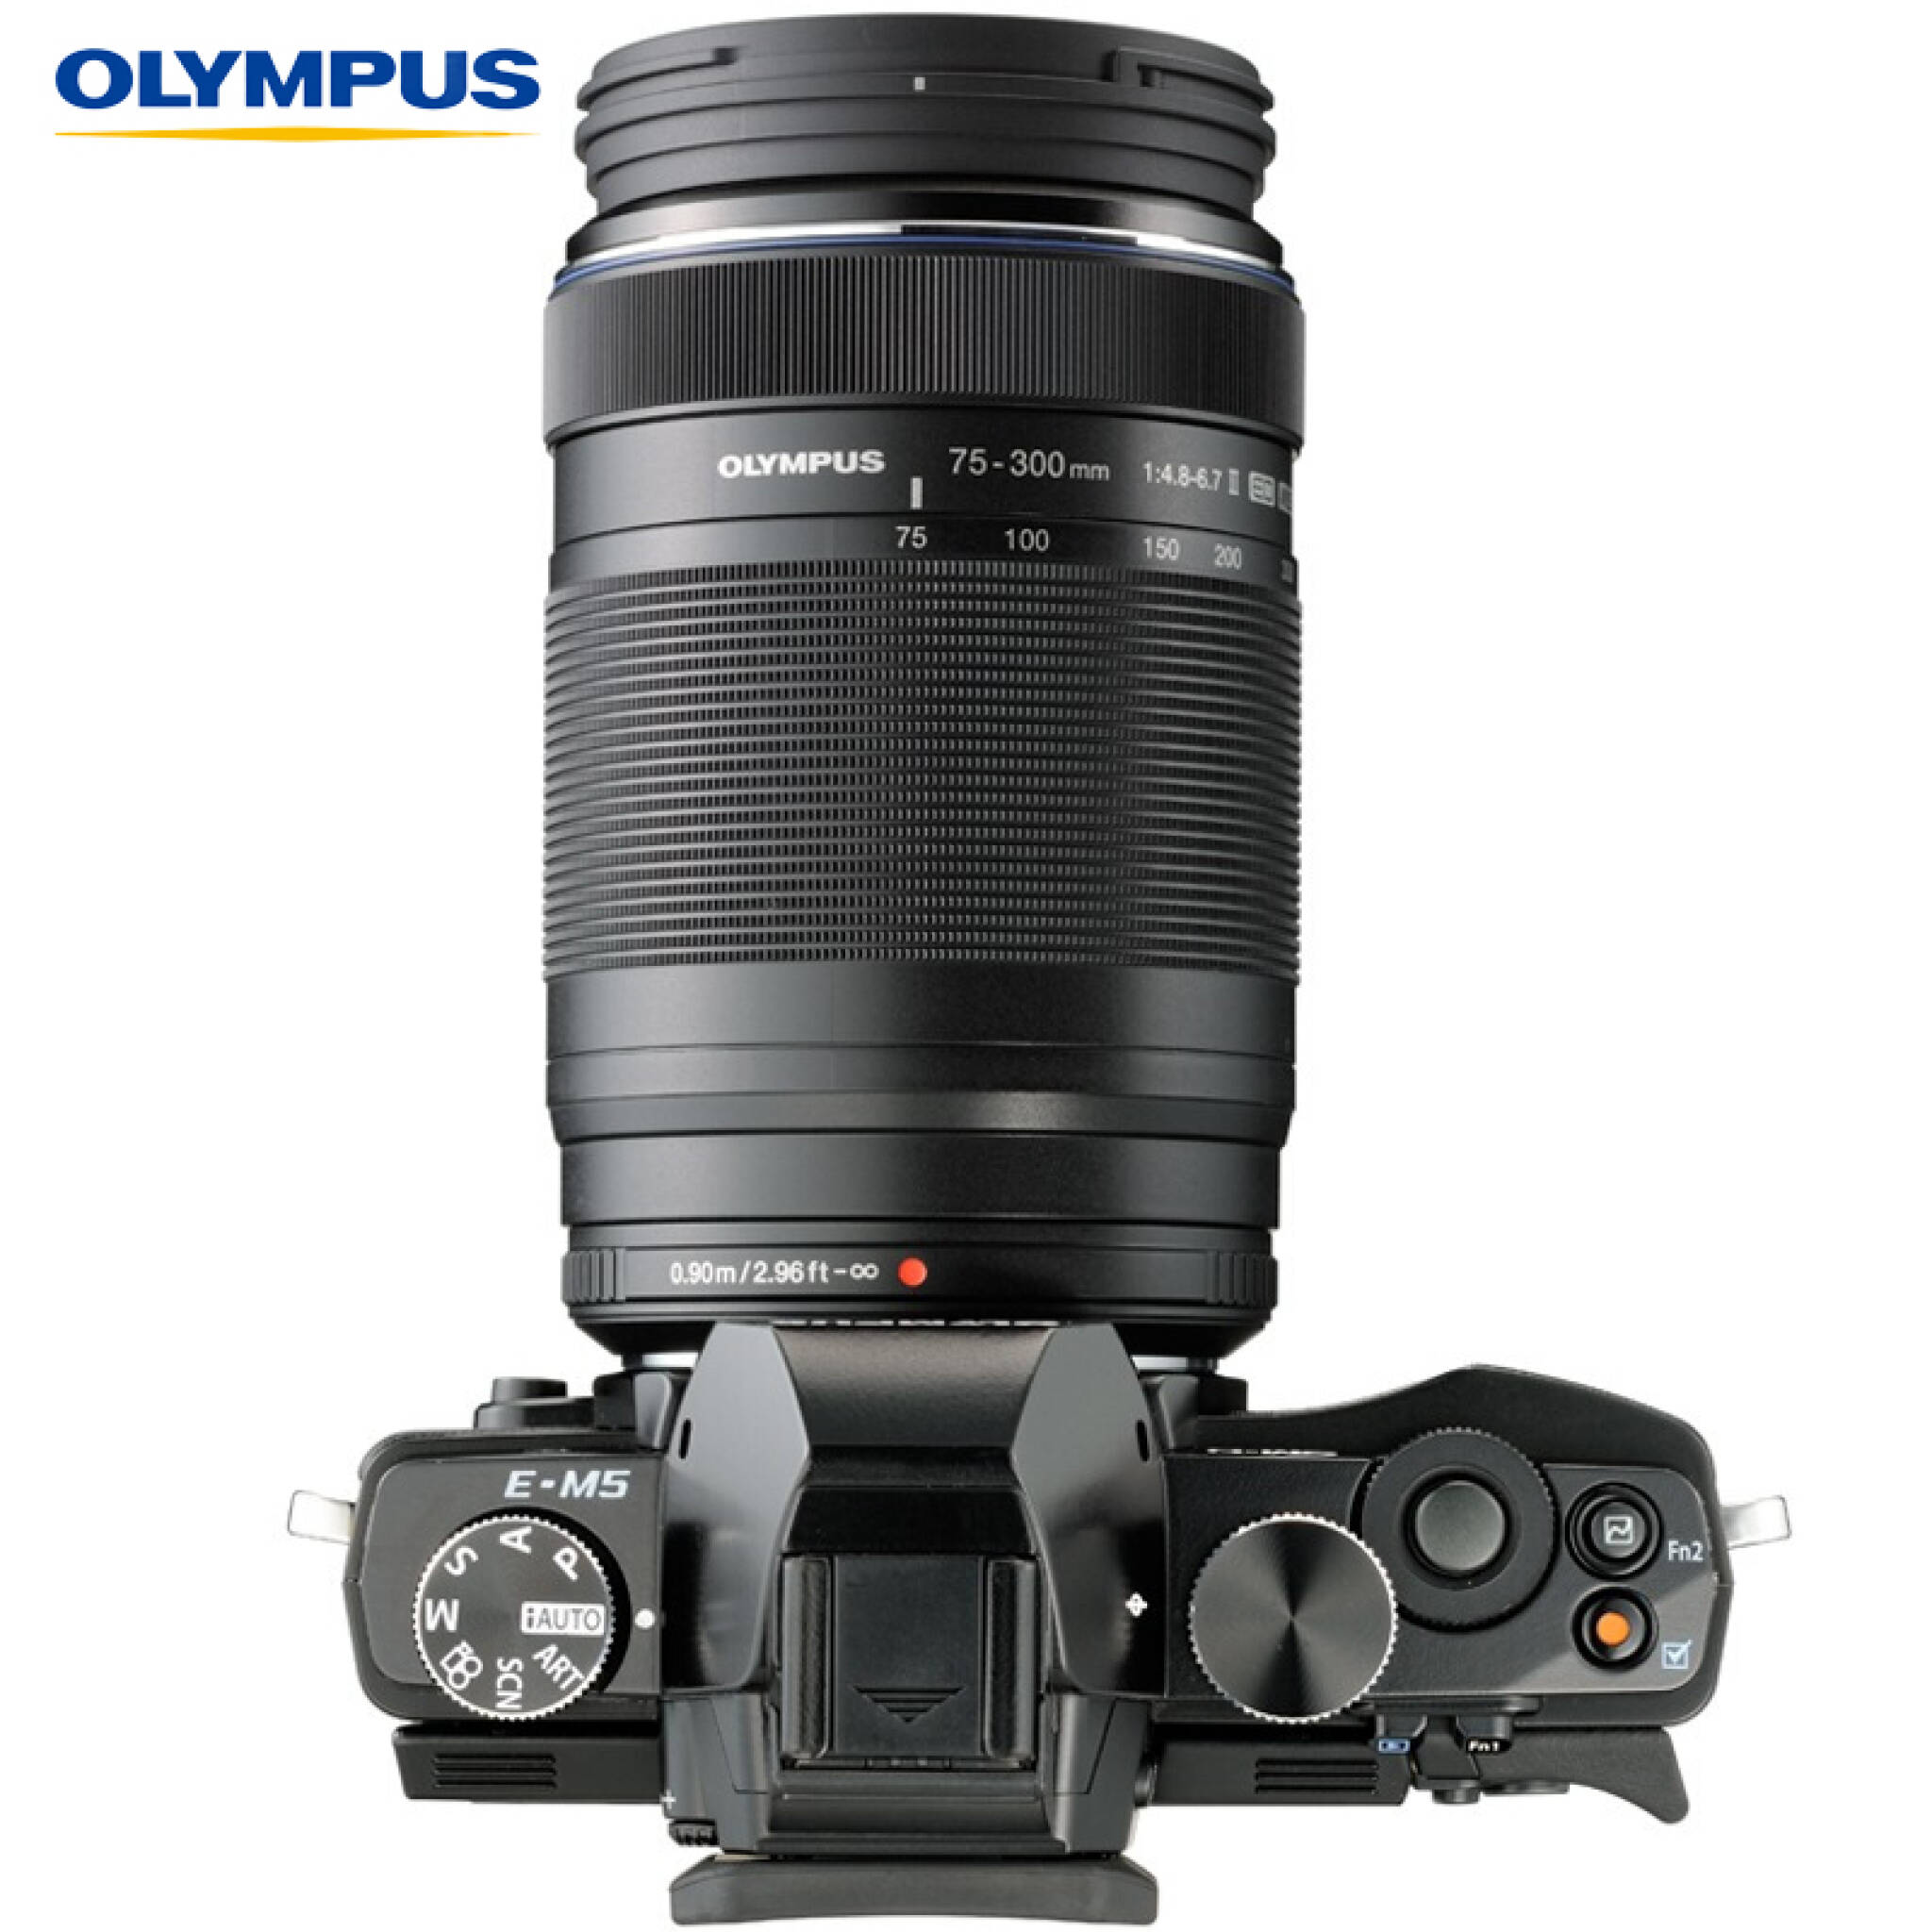 OLYMPUS 超望遠ズームレンズ ZUIKO DIGITAL ED 70-300mm F4.0-5.6